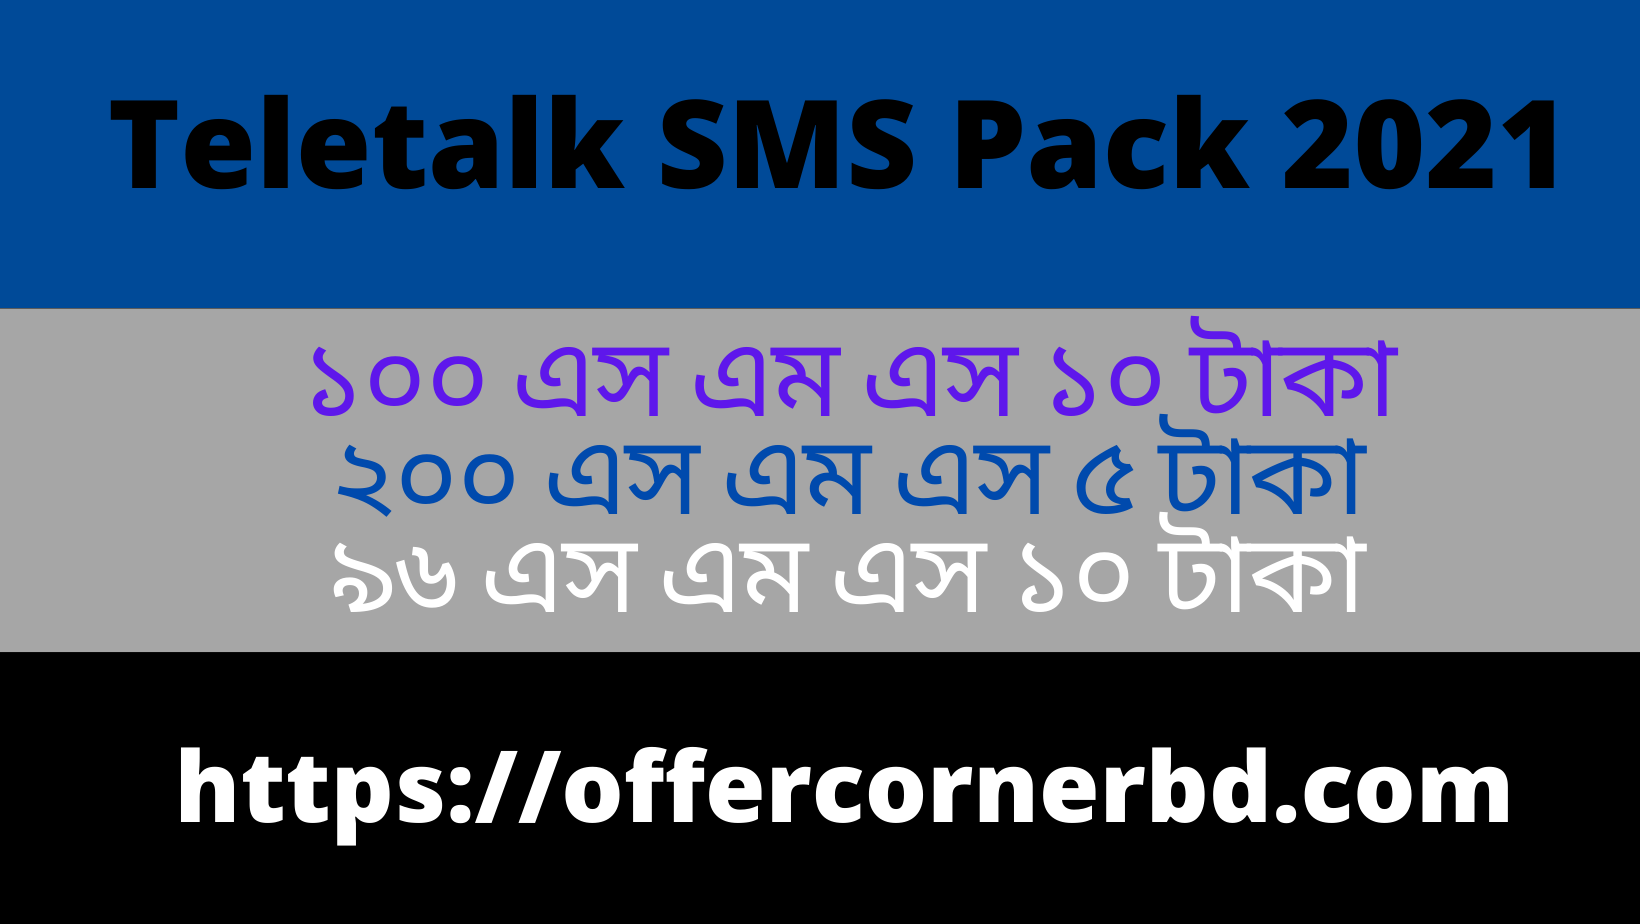 Teletalk SMS Pack 2021 new offer | টেলিটক এস এম এস প্যাক